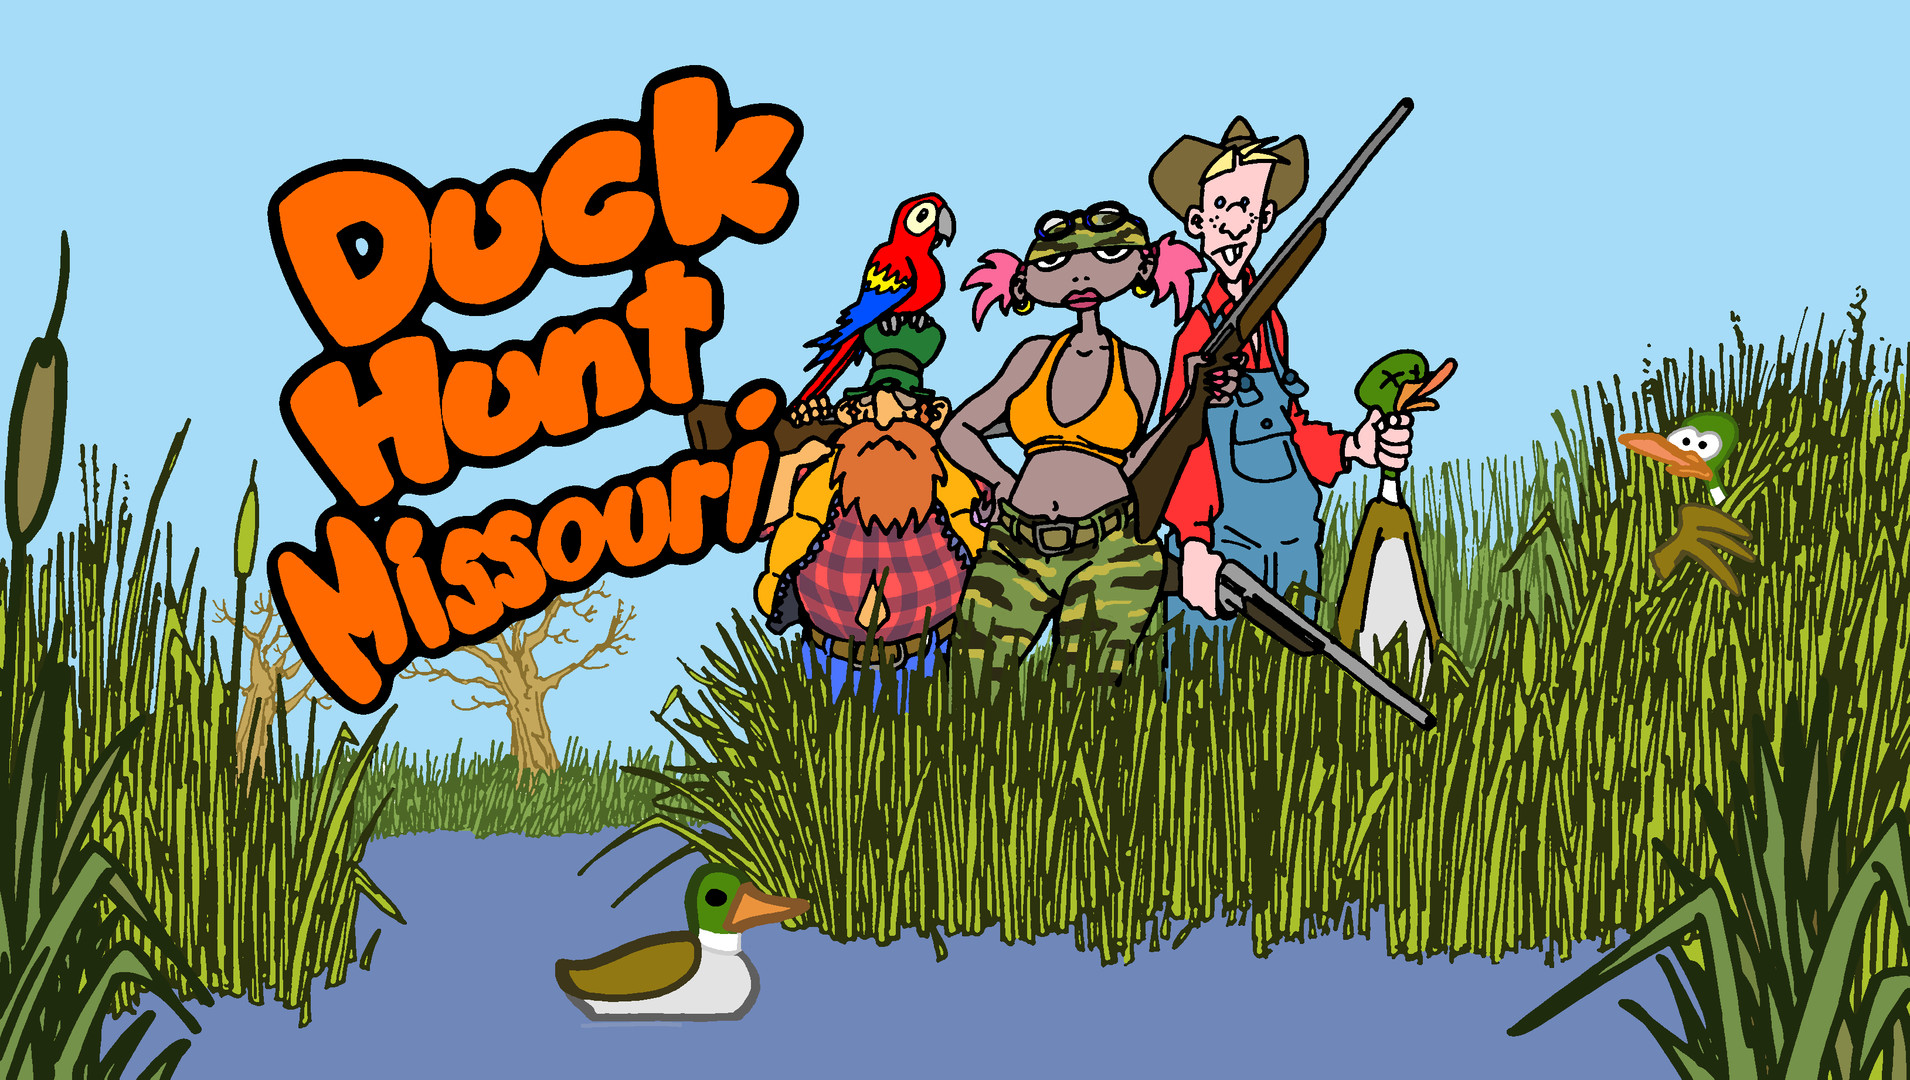 [$ 0.84] DuckHunt - Missouri Steam CD Key